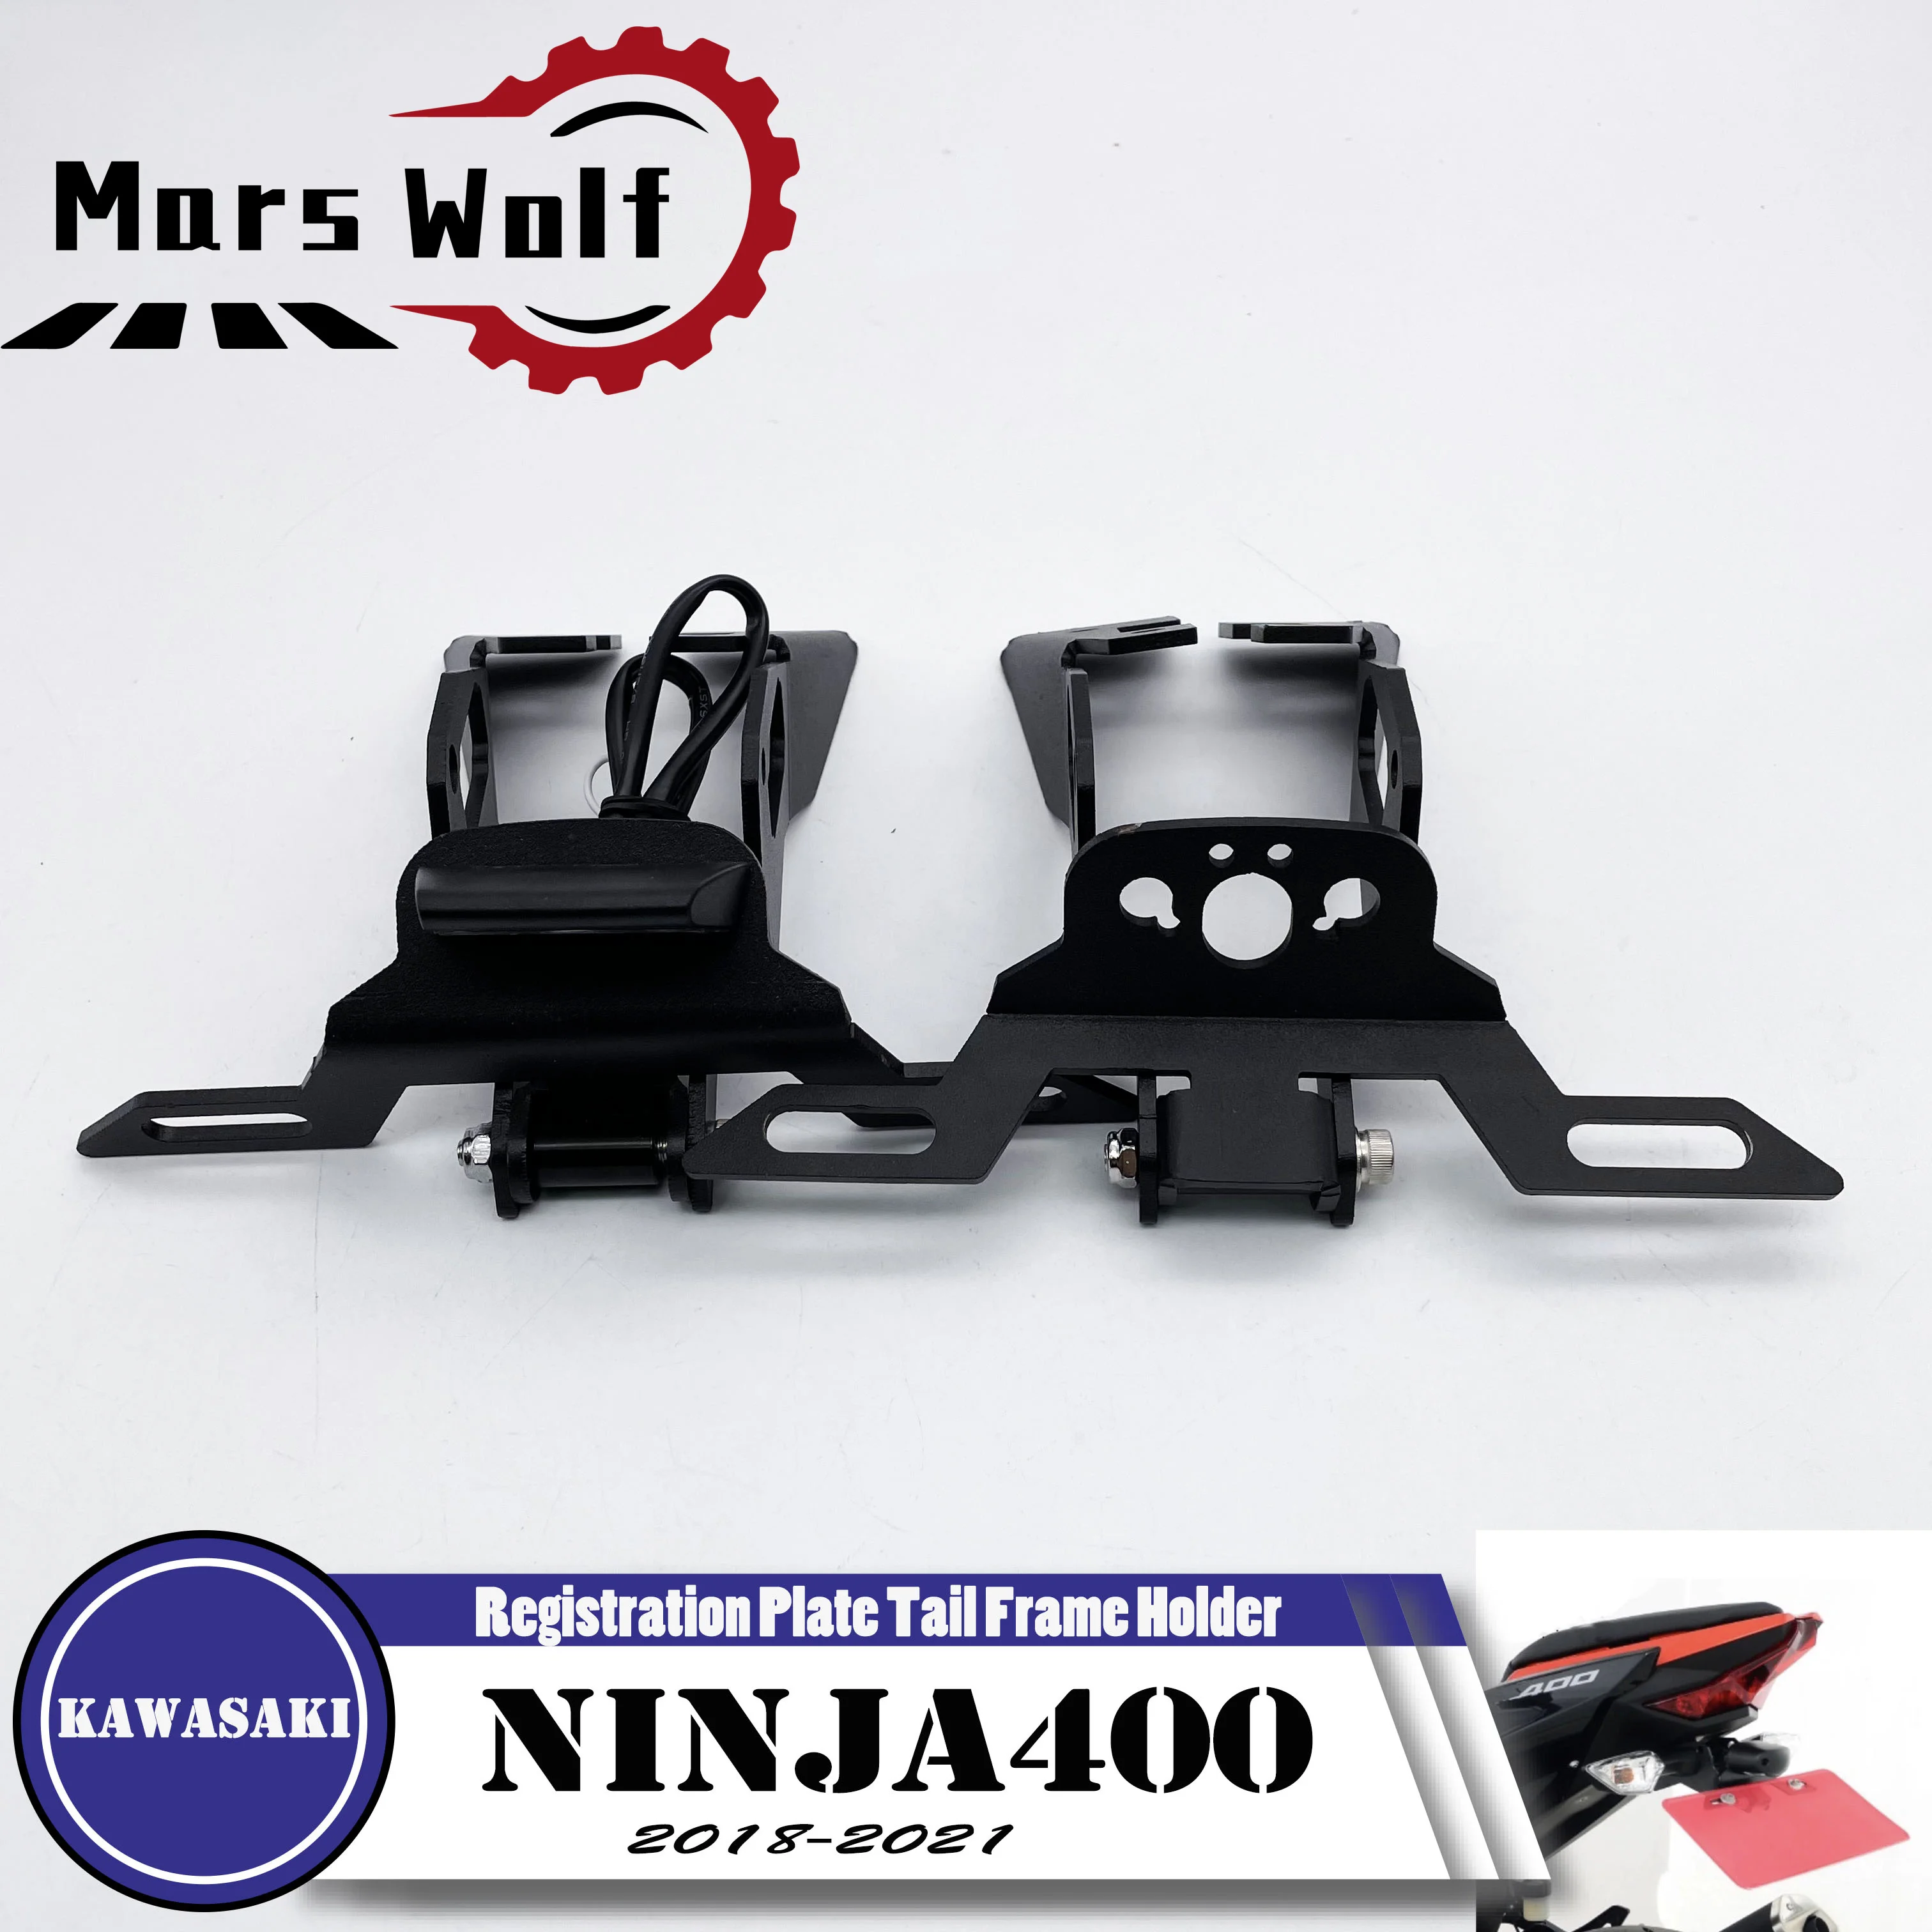 

Motorcycle Rear License Plate Registration Plate Tail Frame Holder Bracket Modified For KAWASAKI NINJA 400 2018-2021 ninja400